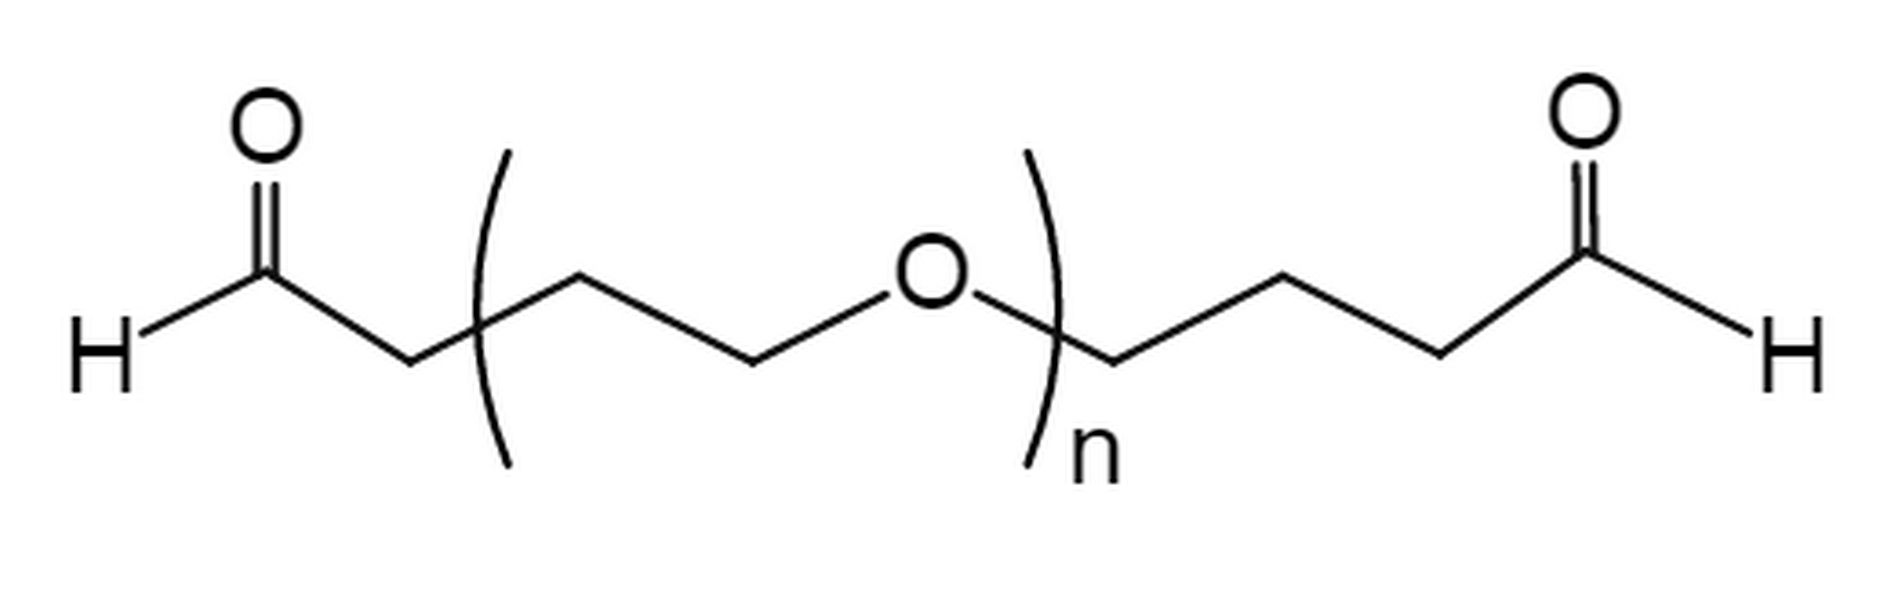 ButyrAldehyde-PEG-ButyrAldehyde, MW 3.4K